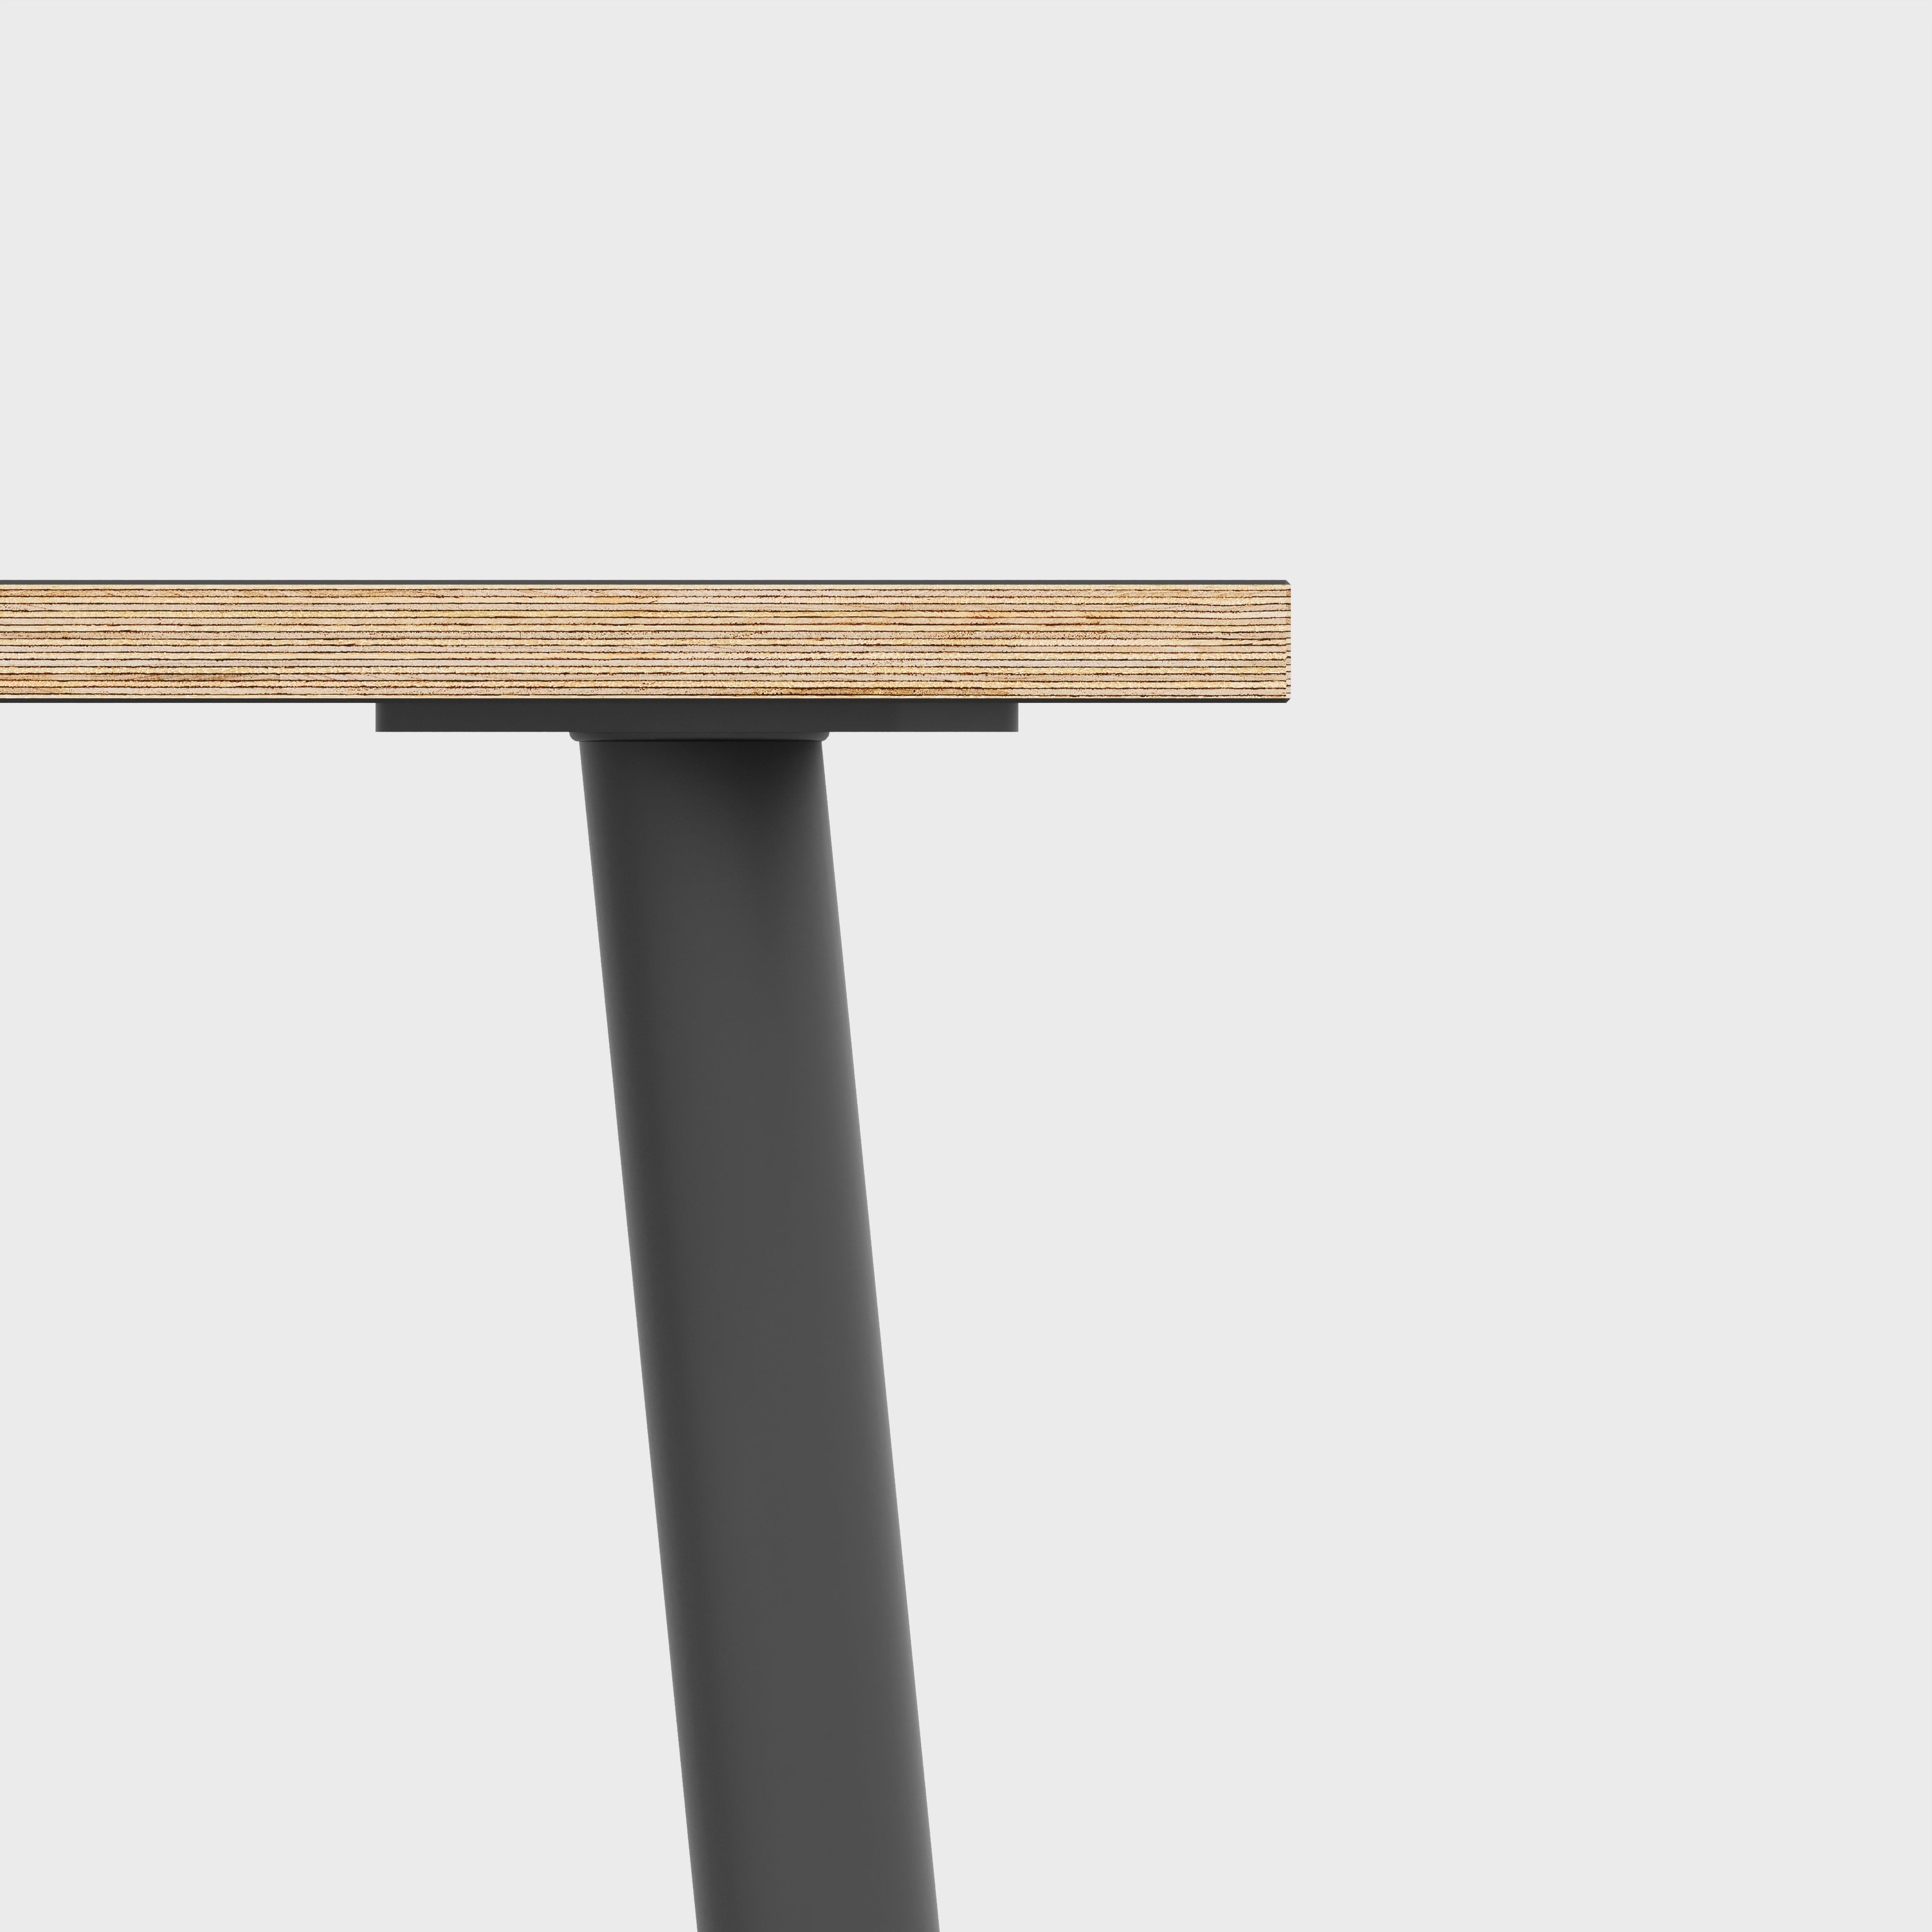 Desk with Black Round Single Pin Legs - Formica Diamond Black - 1200(w) x 600(d) x 735(h)